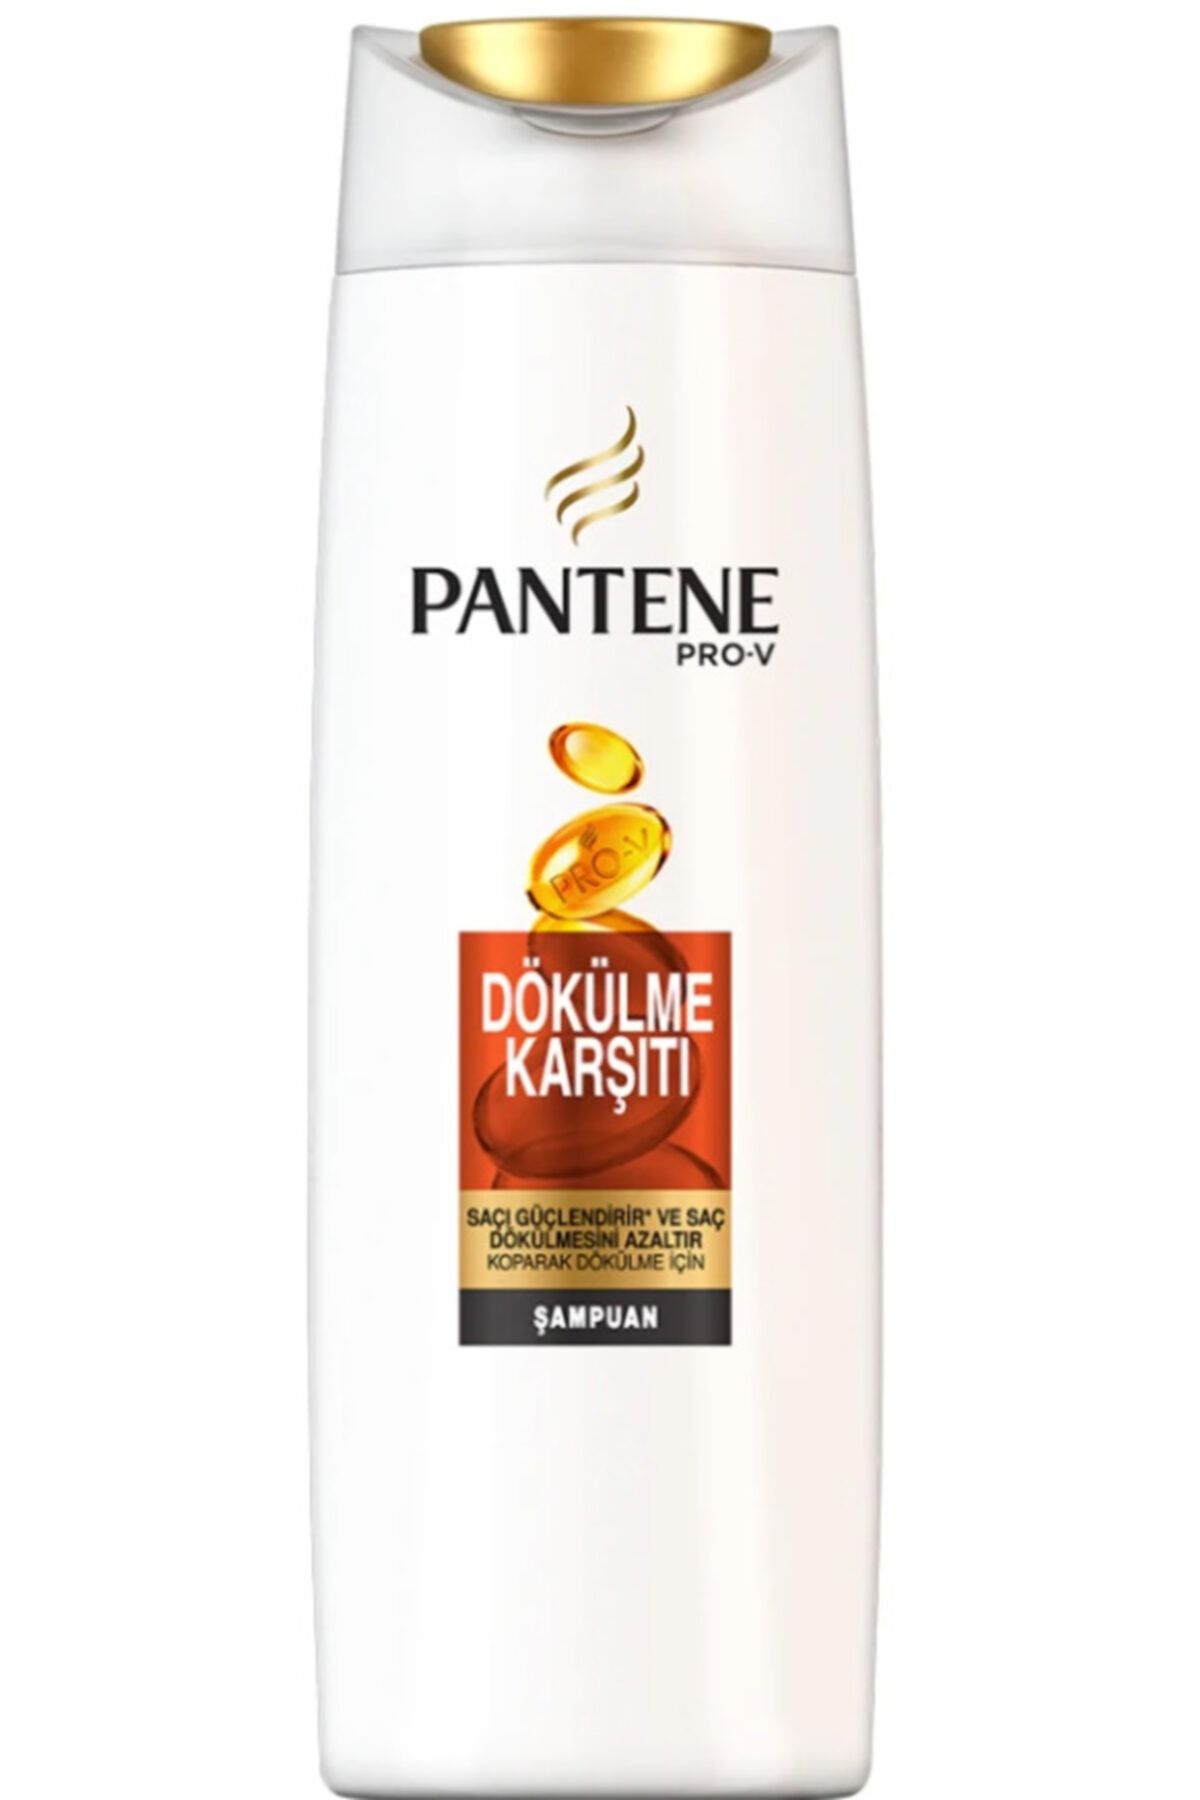 Pantene Pro-v Saç Dökülmesine Karşı Şampuan 500 Ml